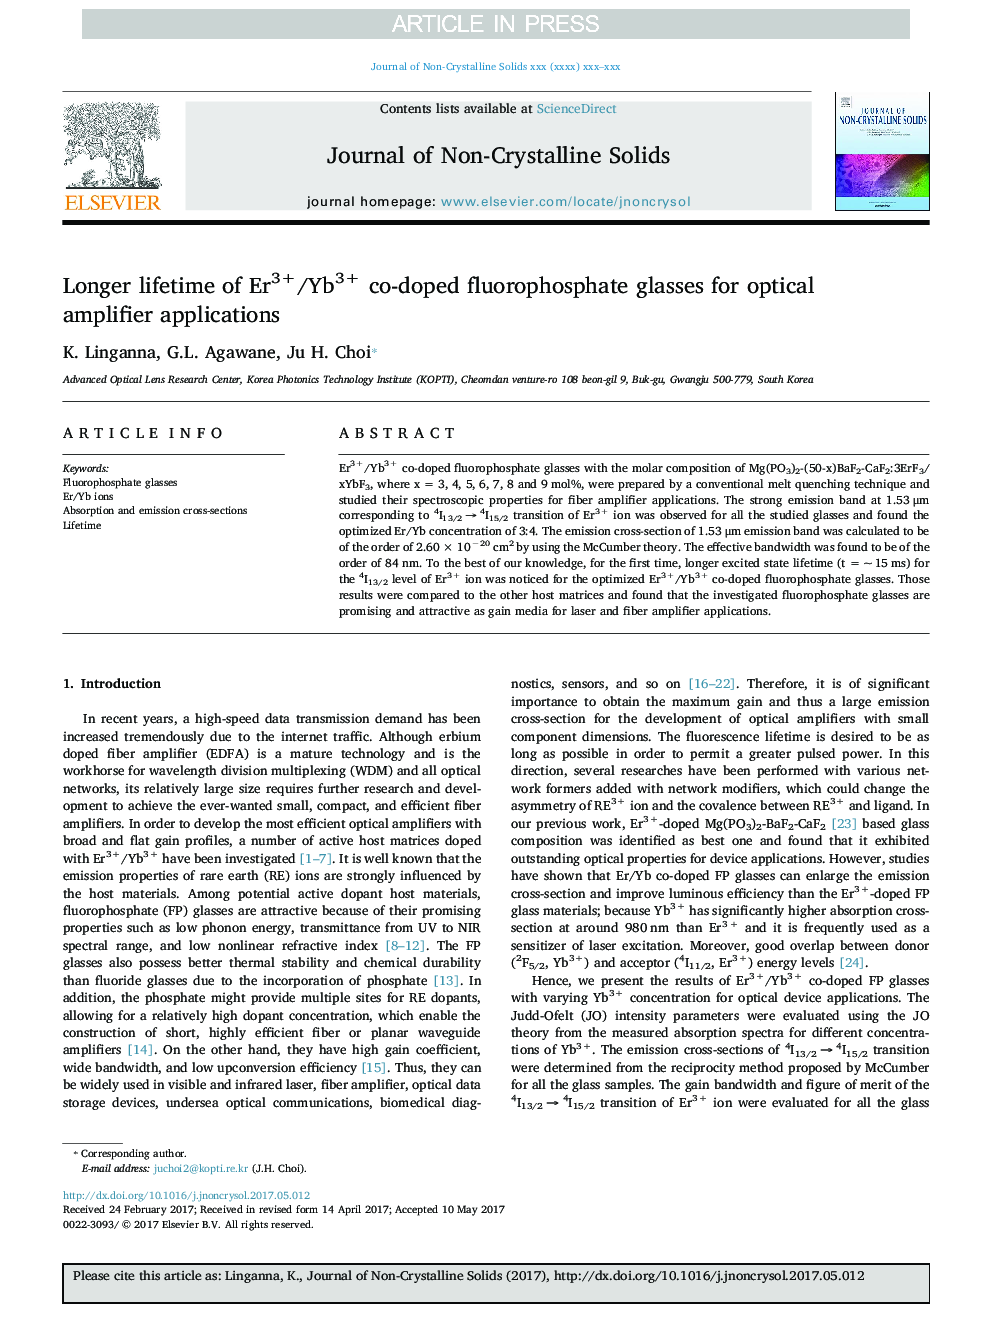 Longer lifetime of Er3+/Yb3+ co-doped fluorophosphate glasses for optical amplifier applications